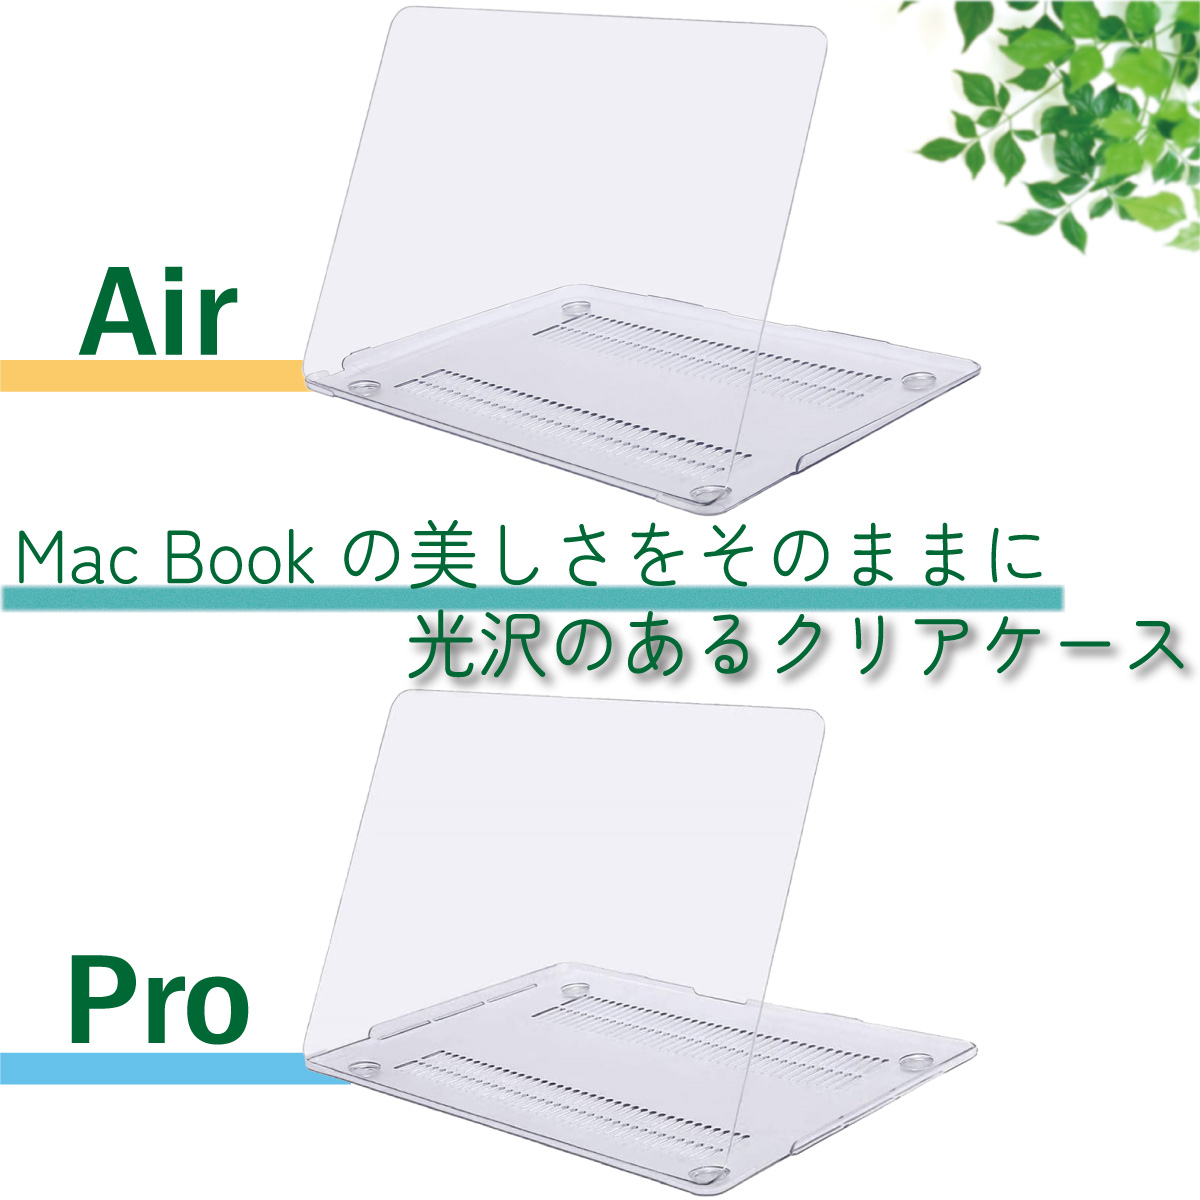 MacBook Air 13 ハードケース 保護ケース Pro 軽量 透明 日本語配列